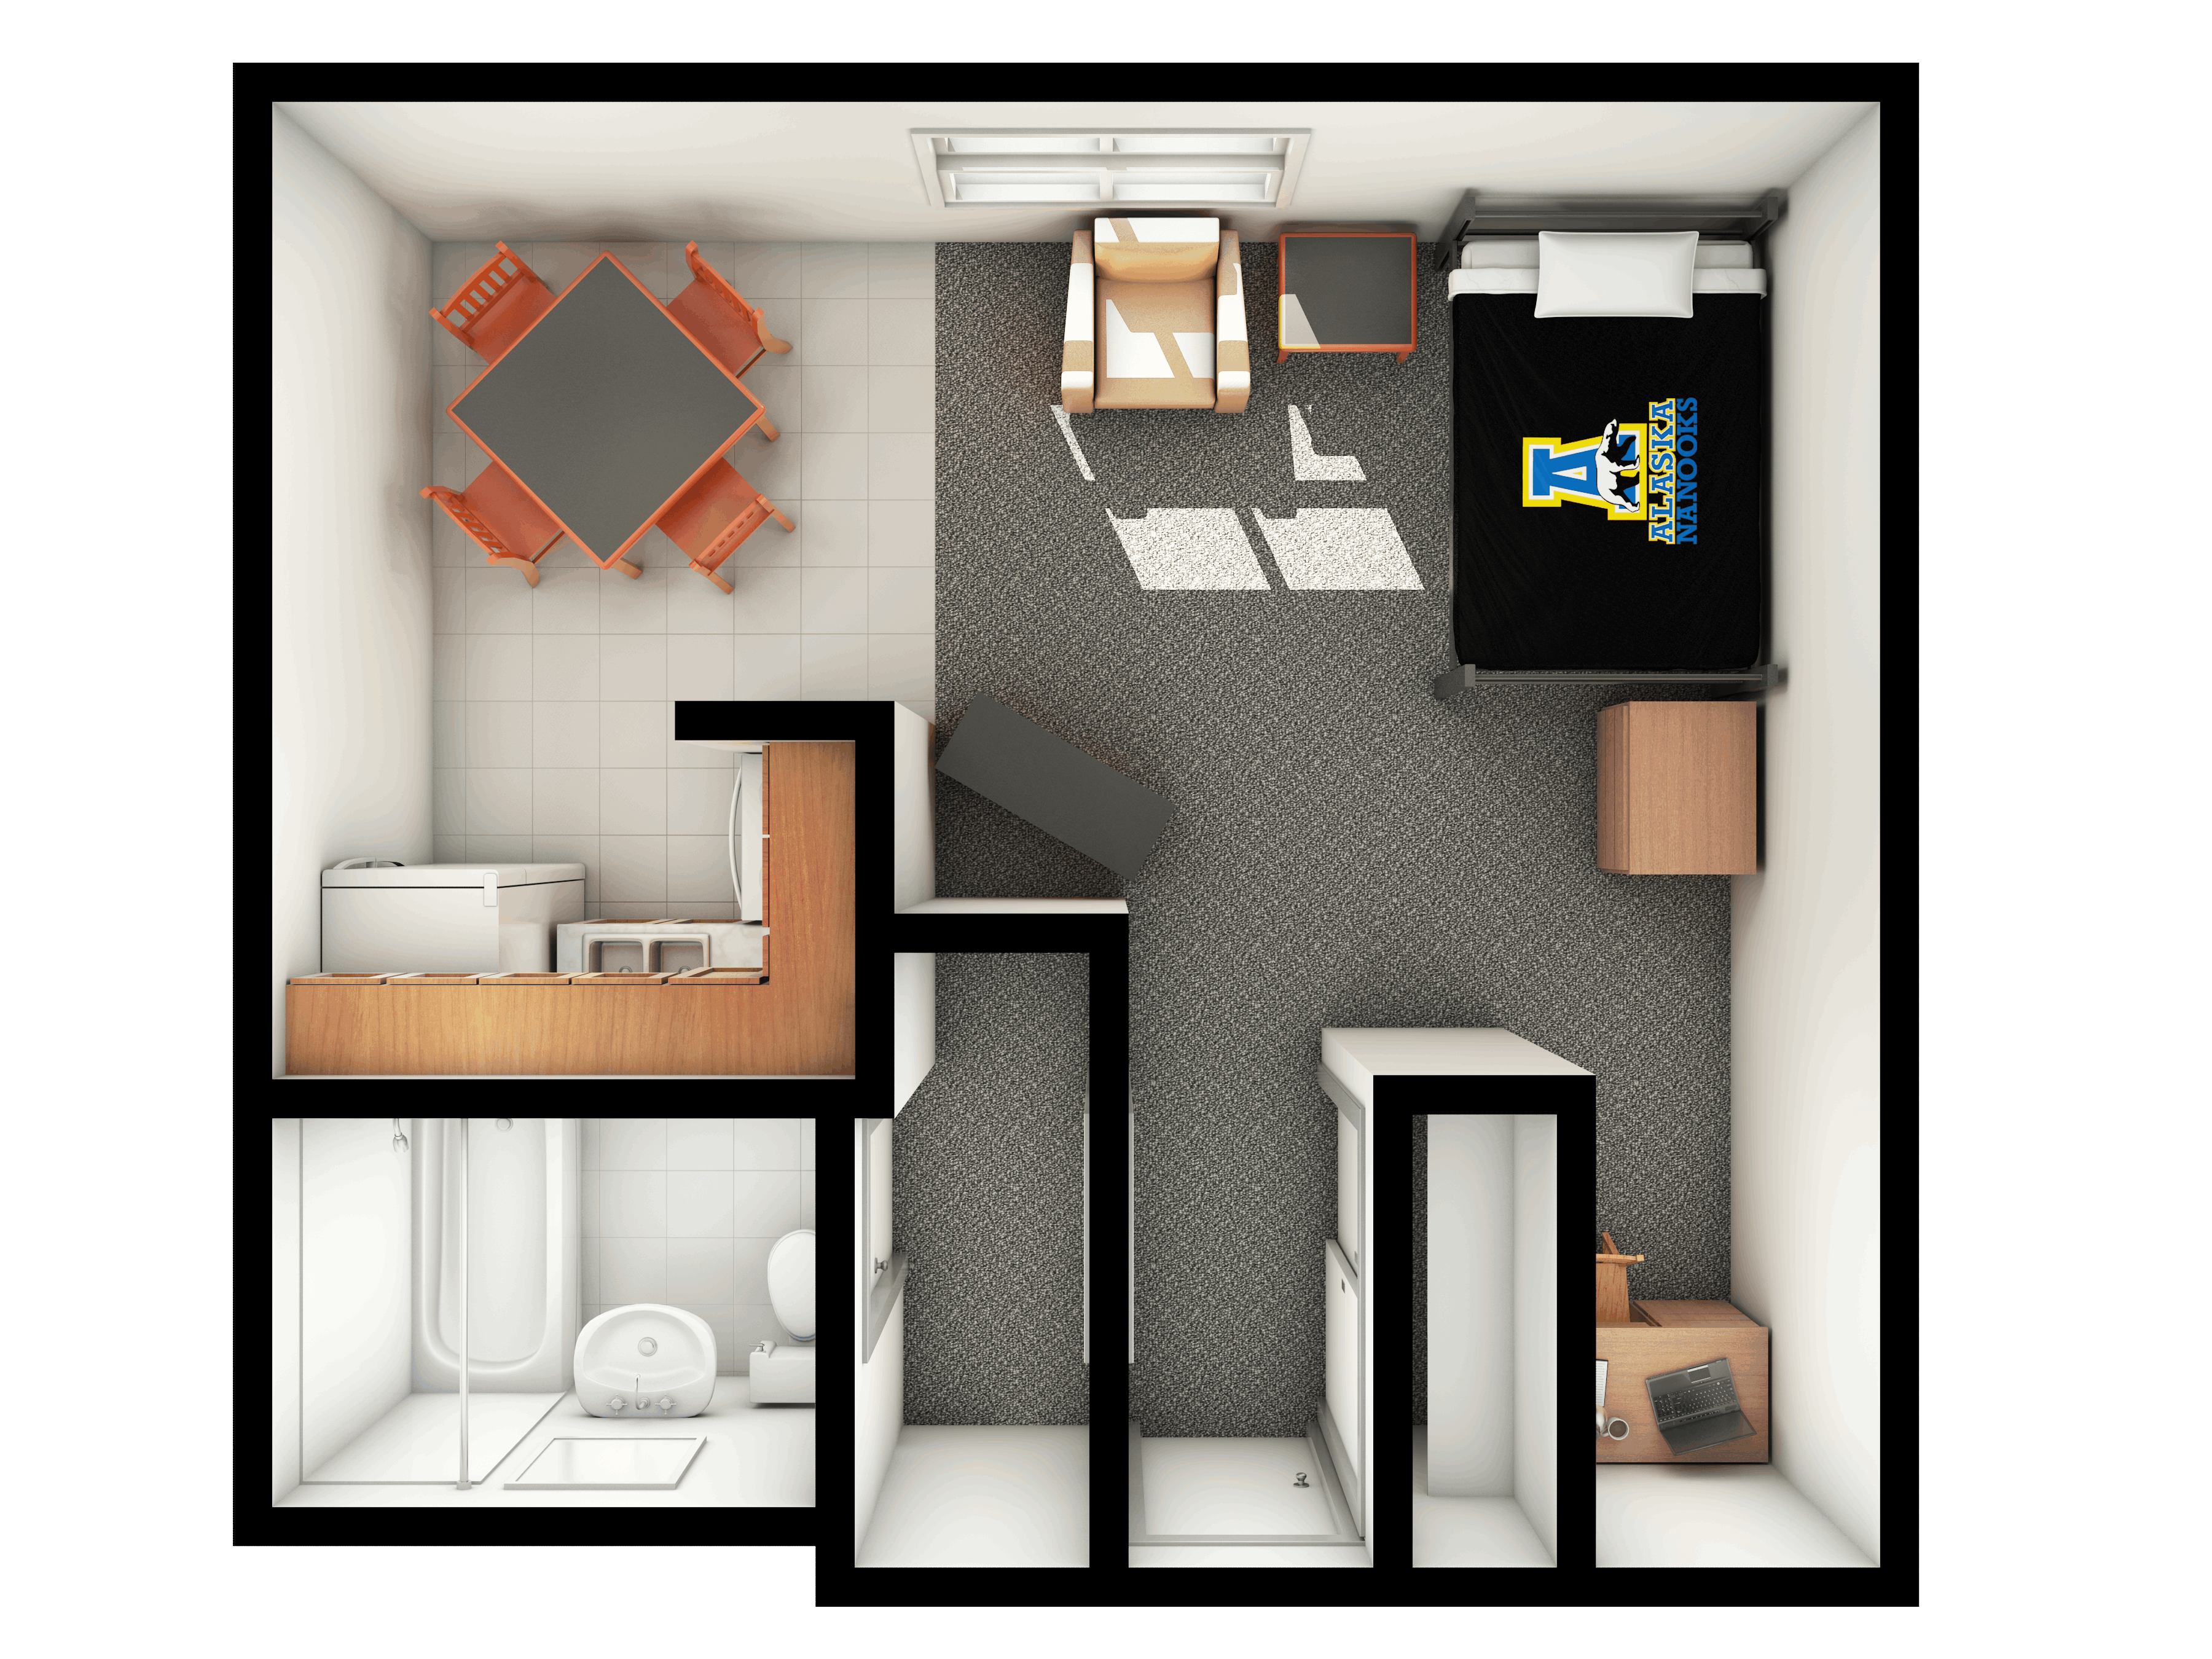 Harwood Efficiency apartment layout 